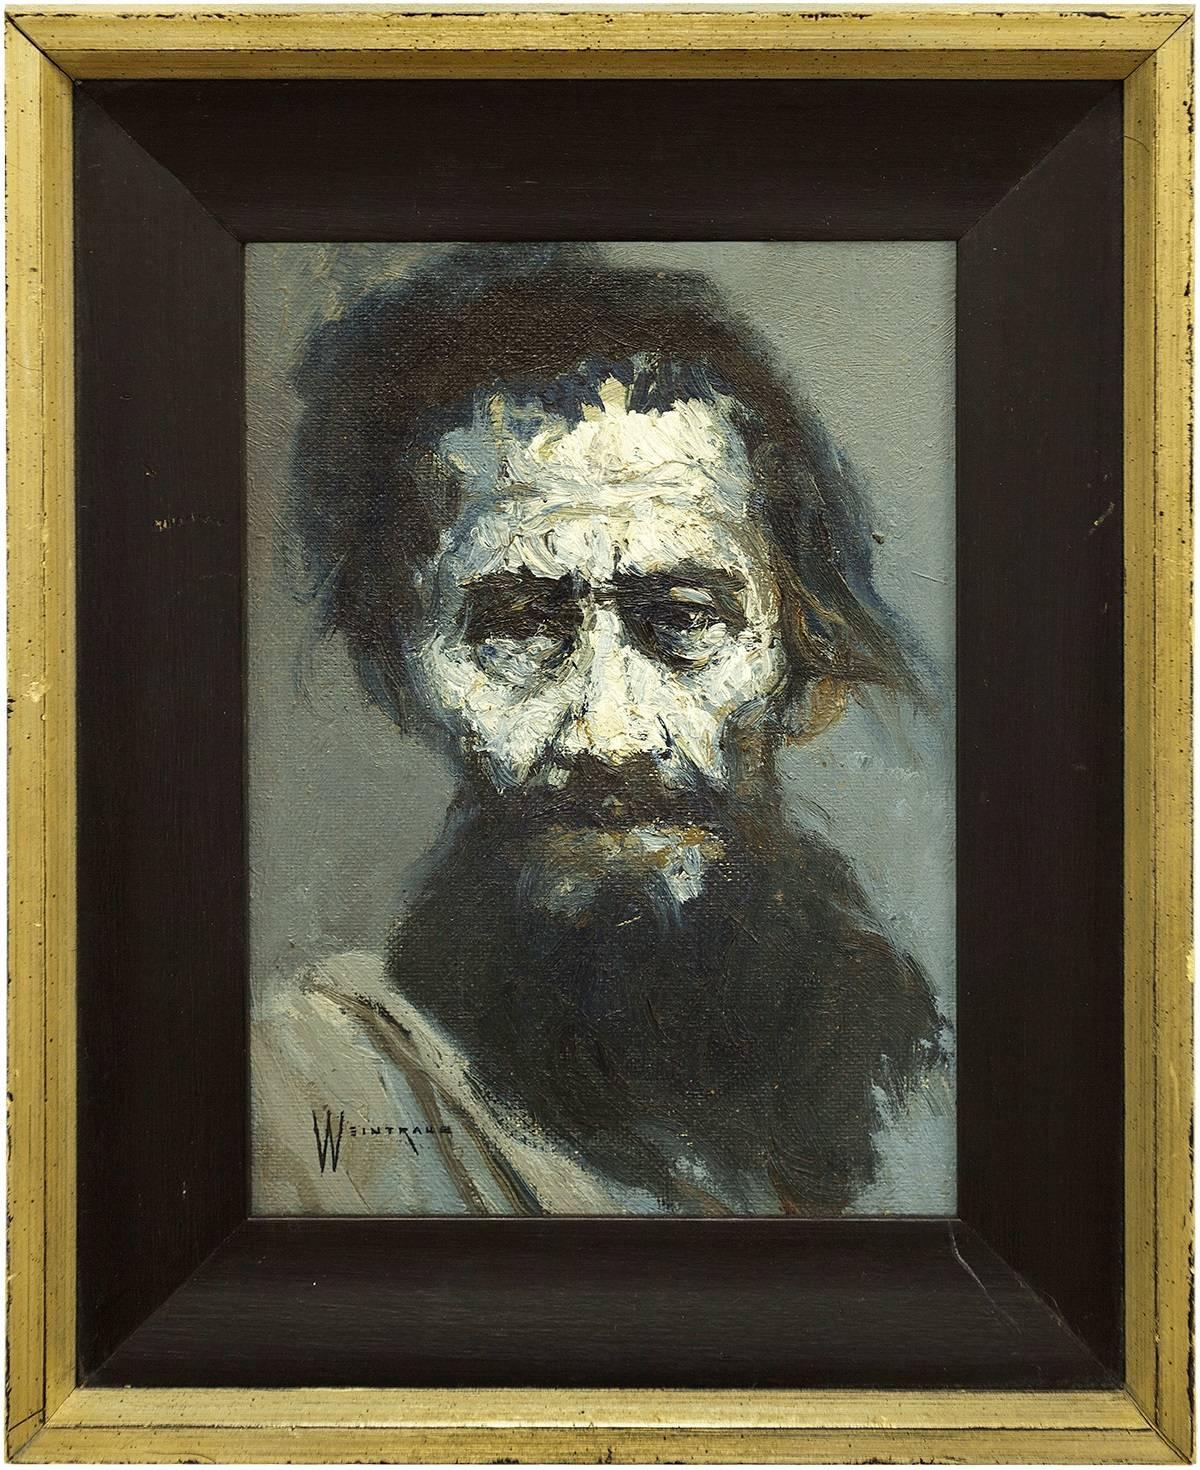 William Weintraub Portrait Painting - Portrait of a Man, Mid Century Expressionast Israeli Painting